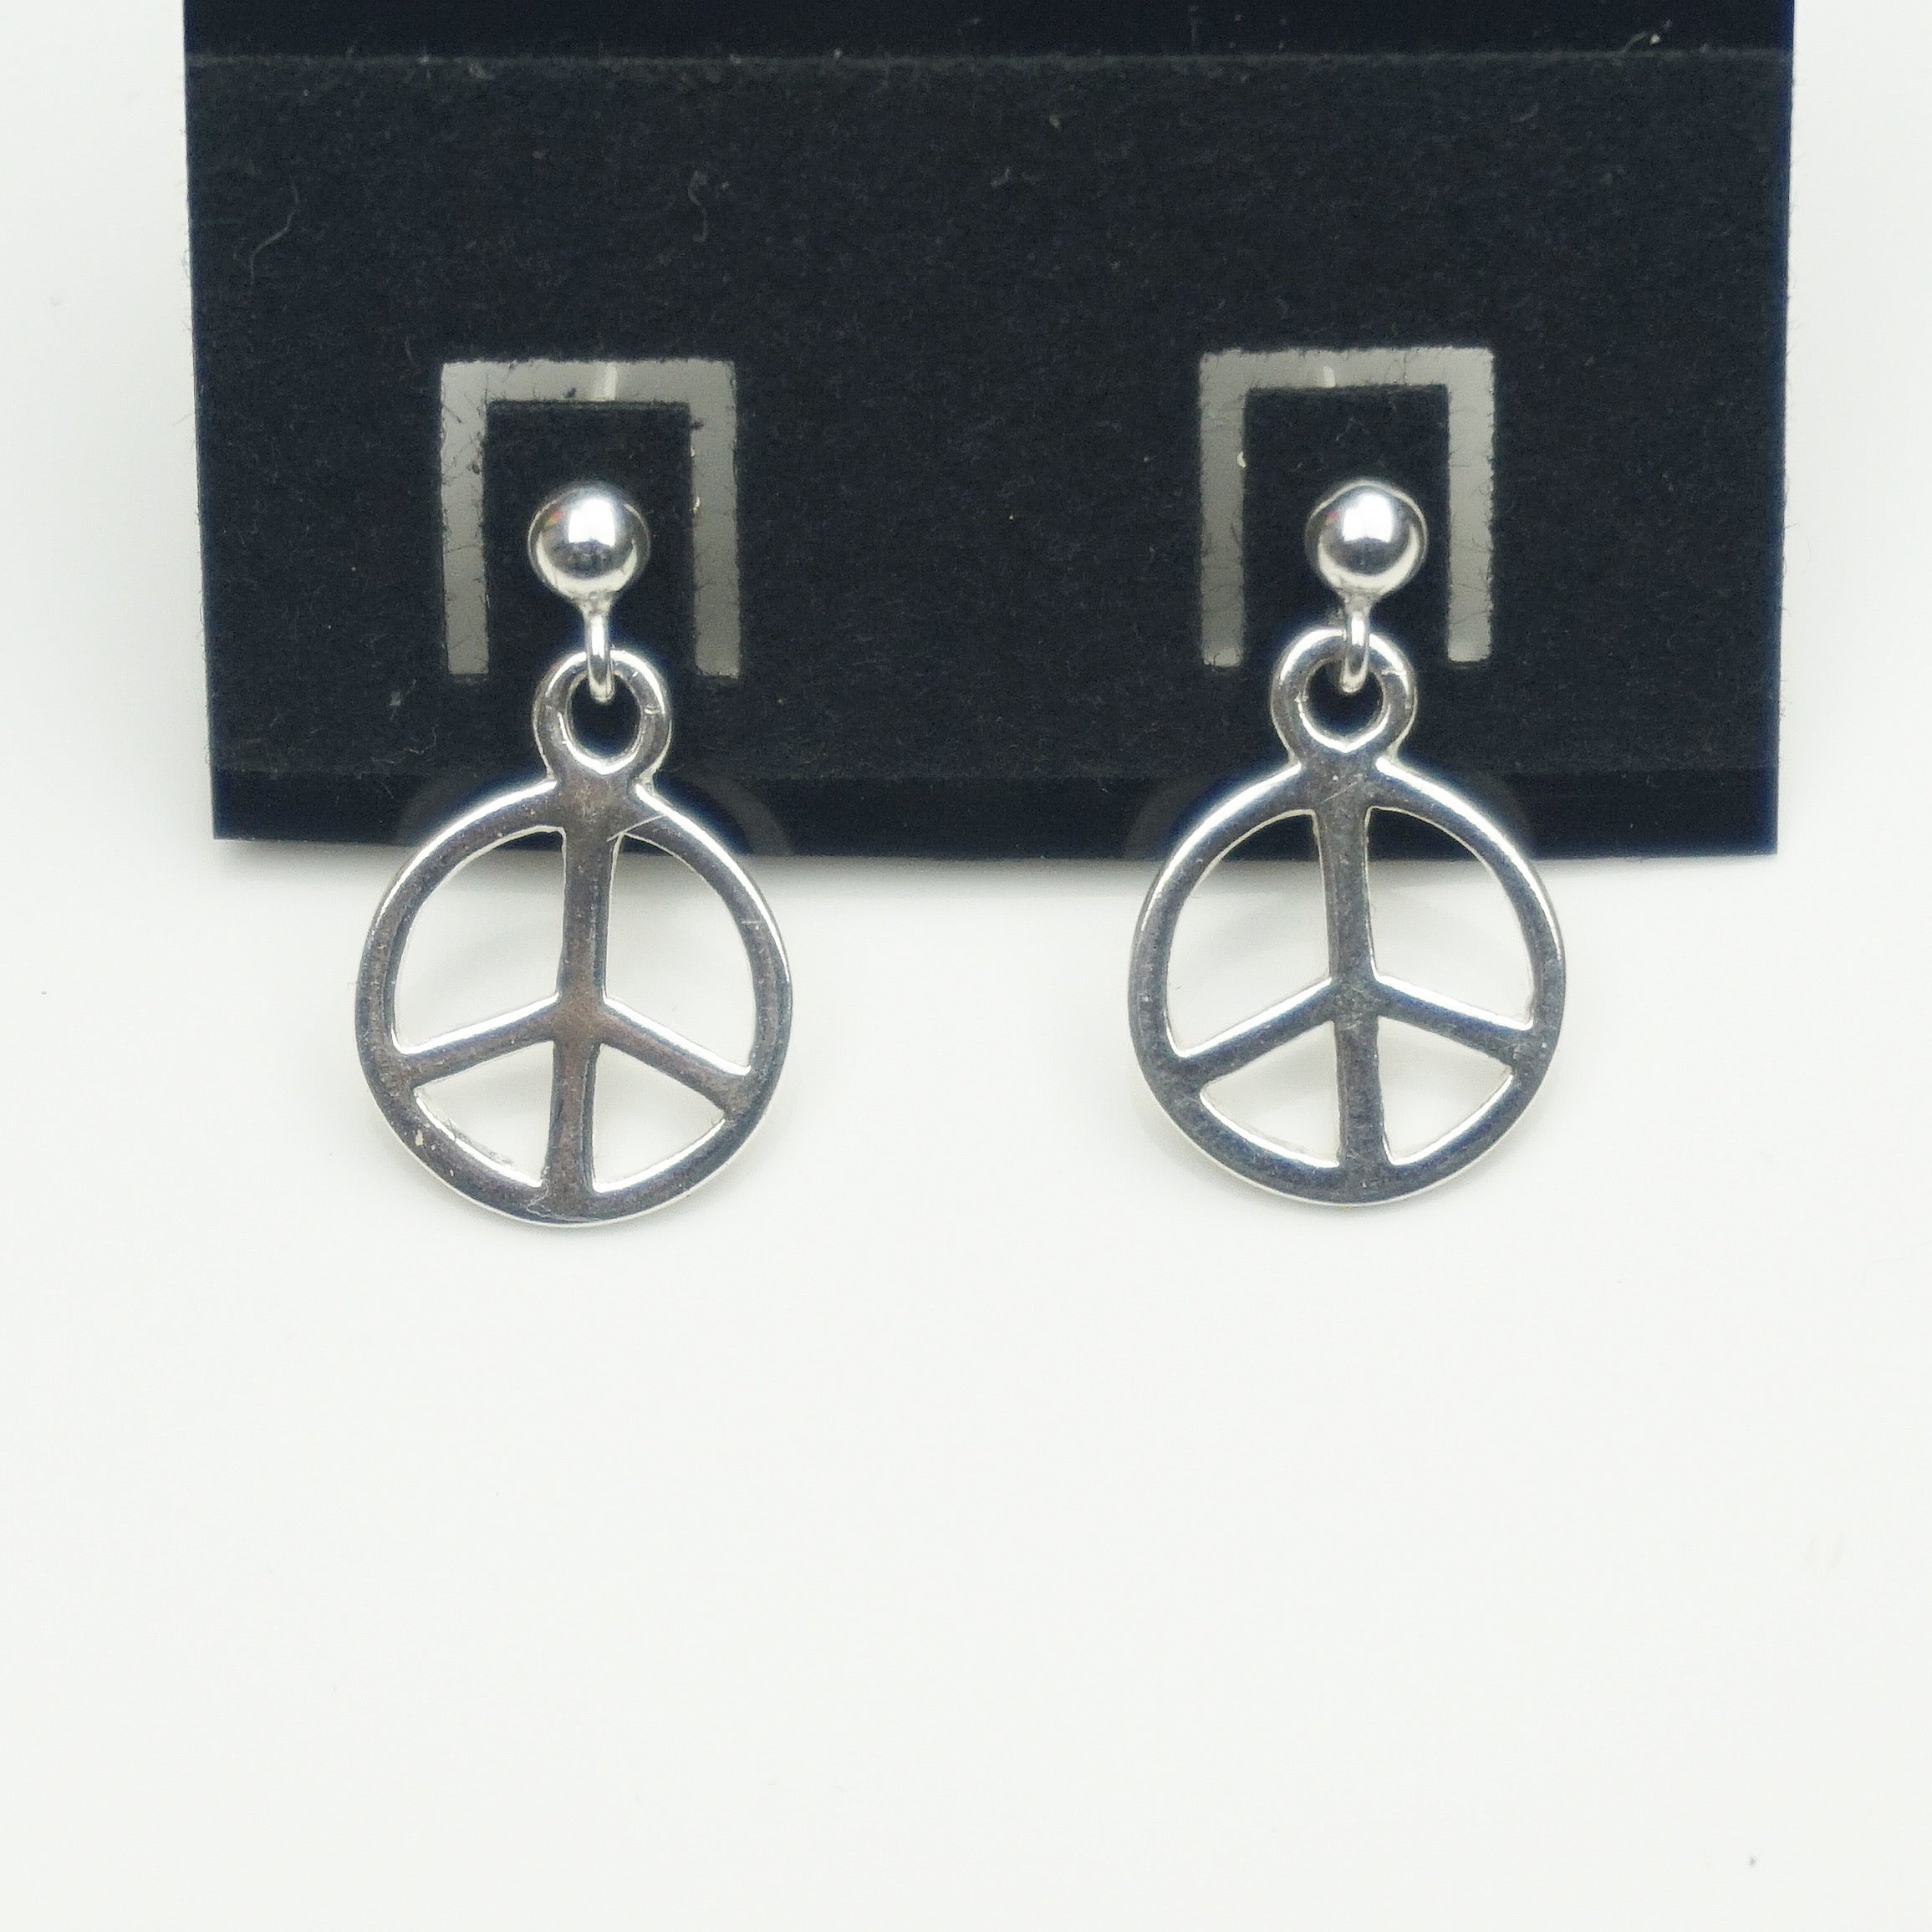 Mini Peace Sign Earrings